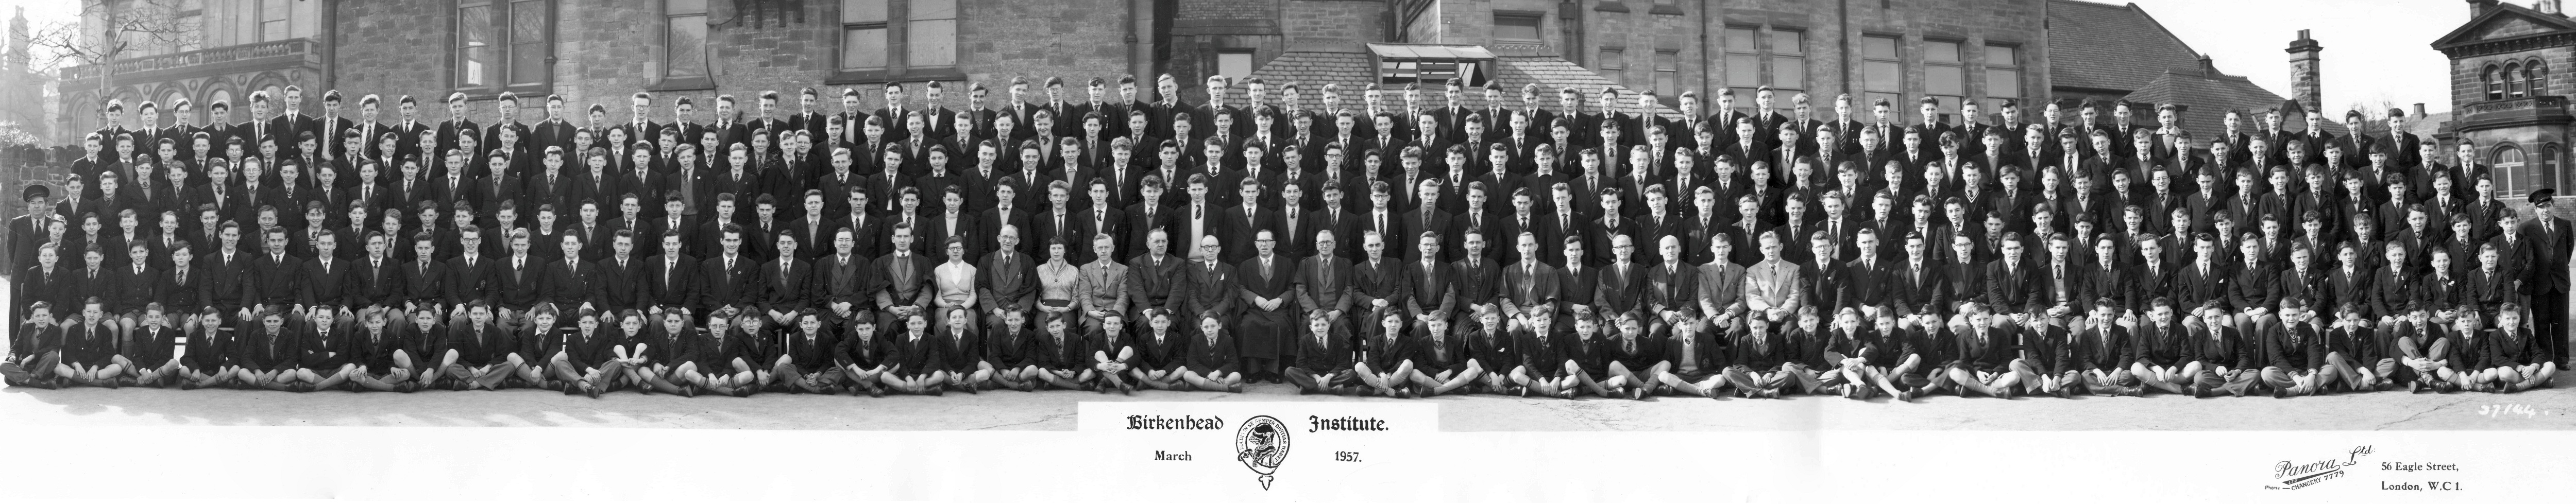 Whole School Photograph 1957